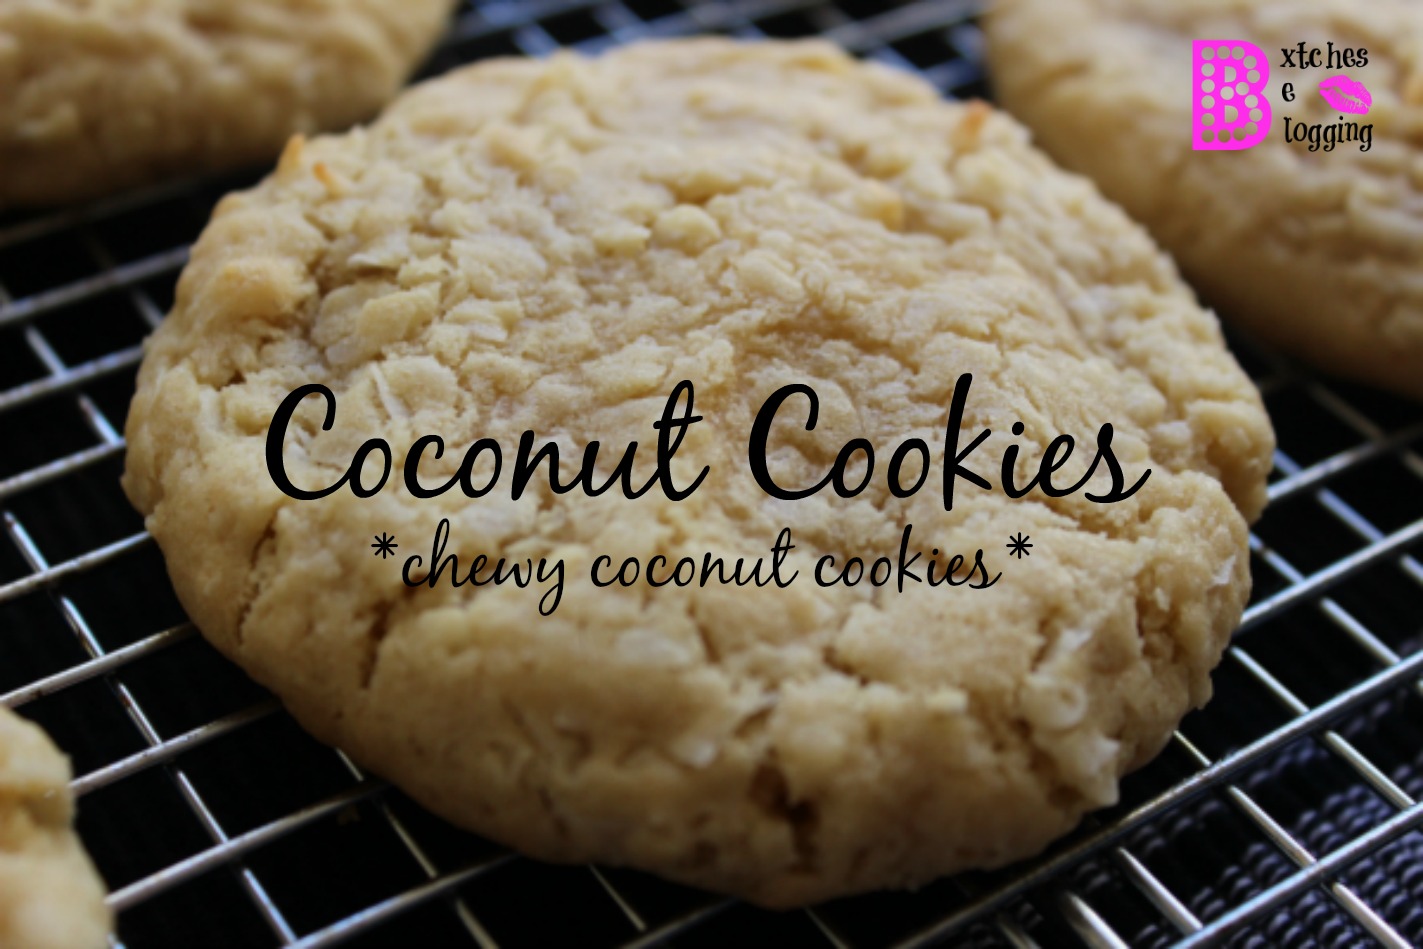 Coconut Cookies | Recipe on www.bxtchesbeblogging.com